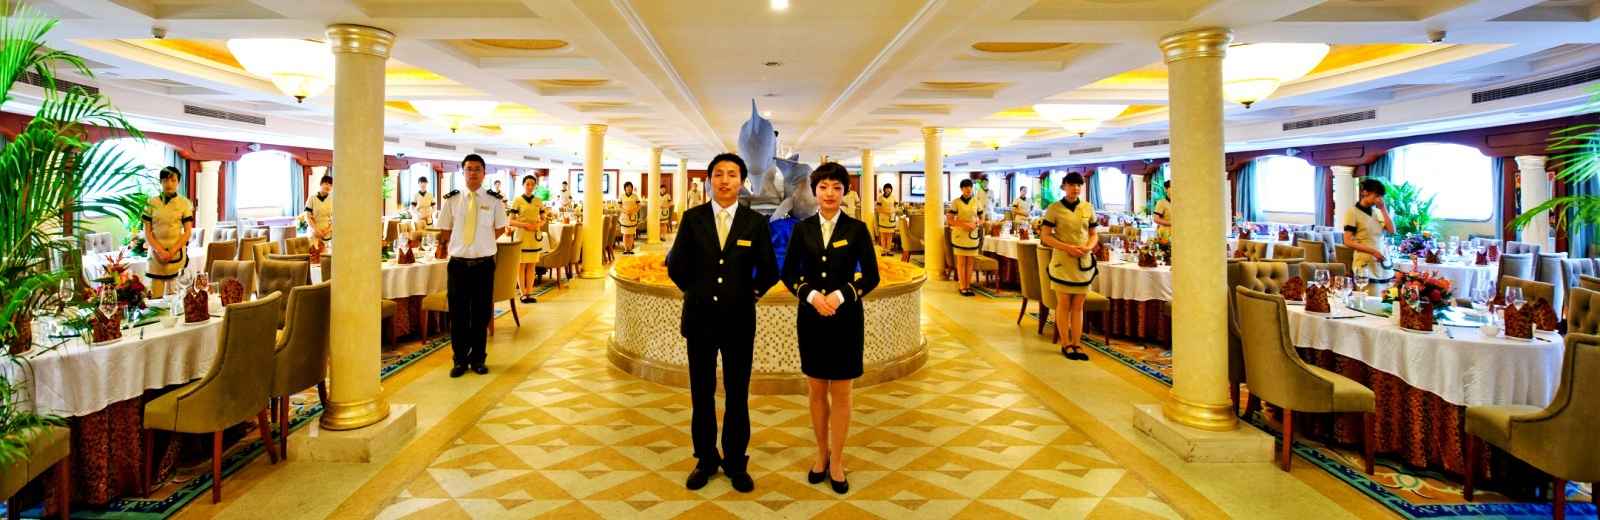 Yangtze Gold Cruises